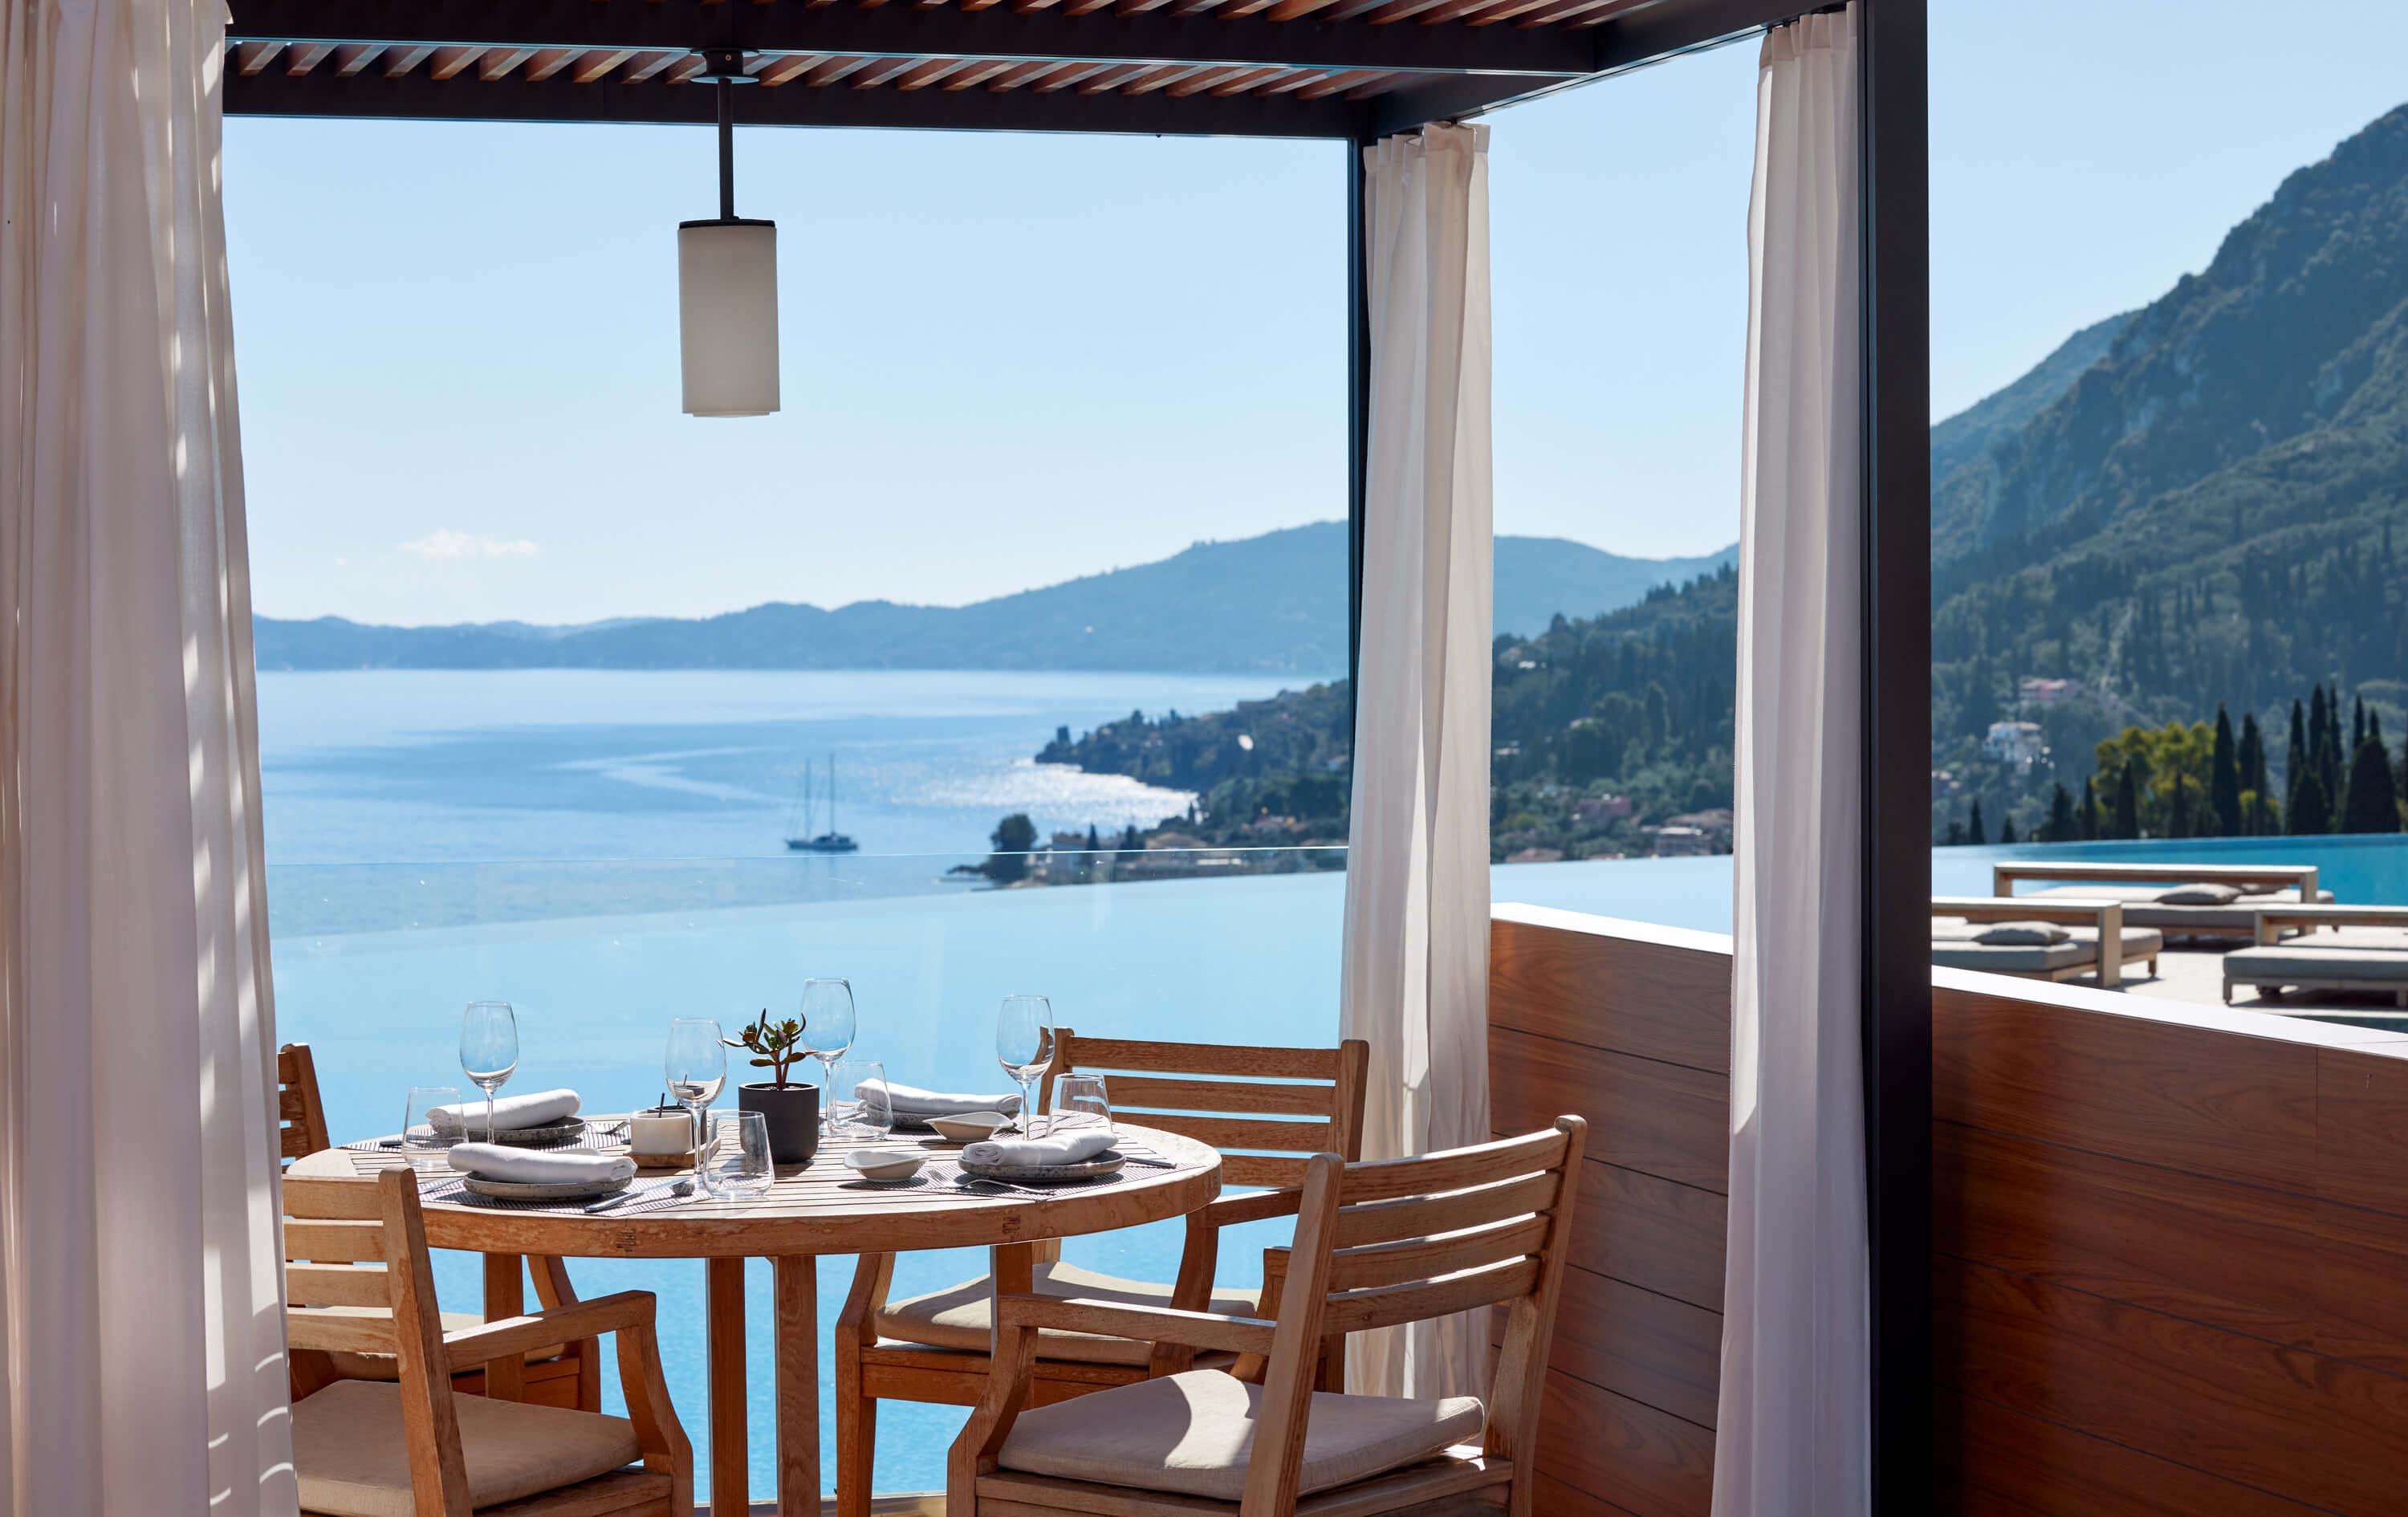 corfu restaurants with view